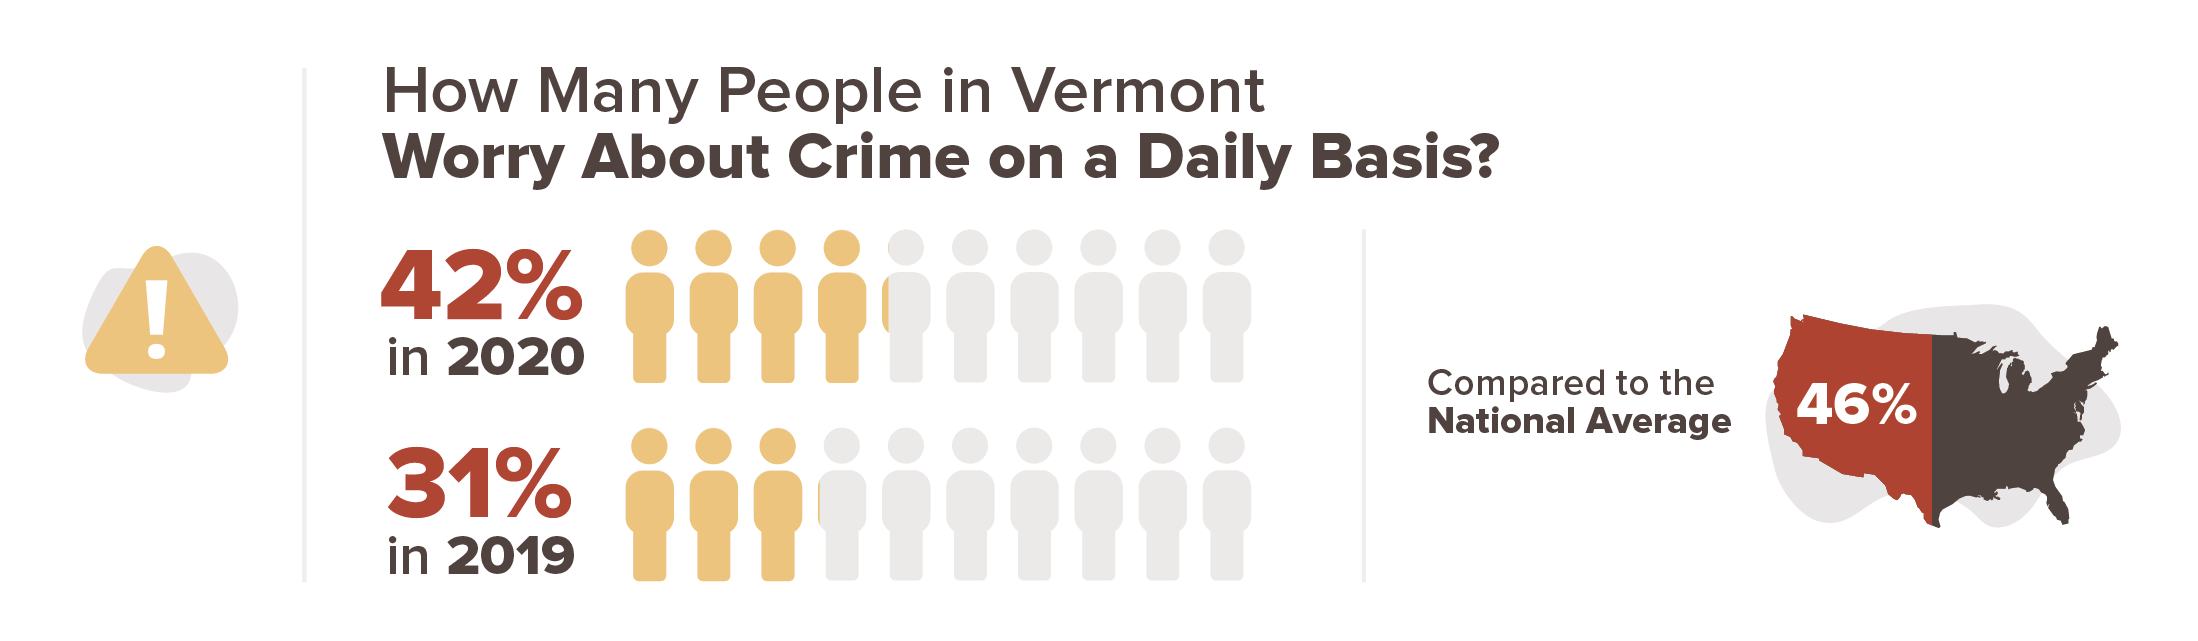 Vermont crime concern infographic